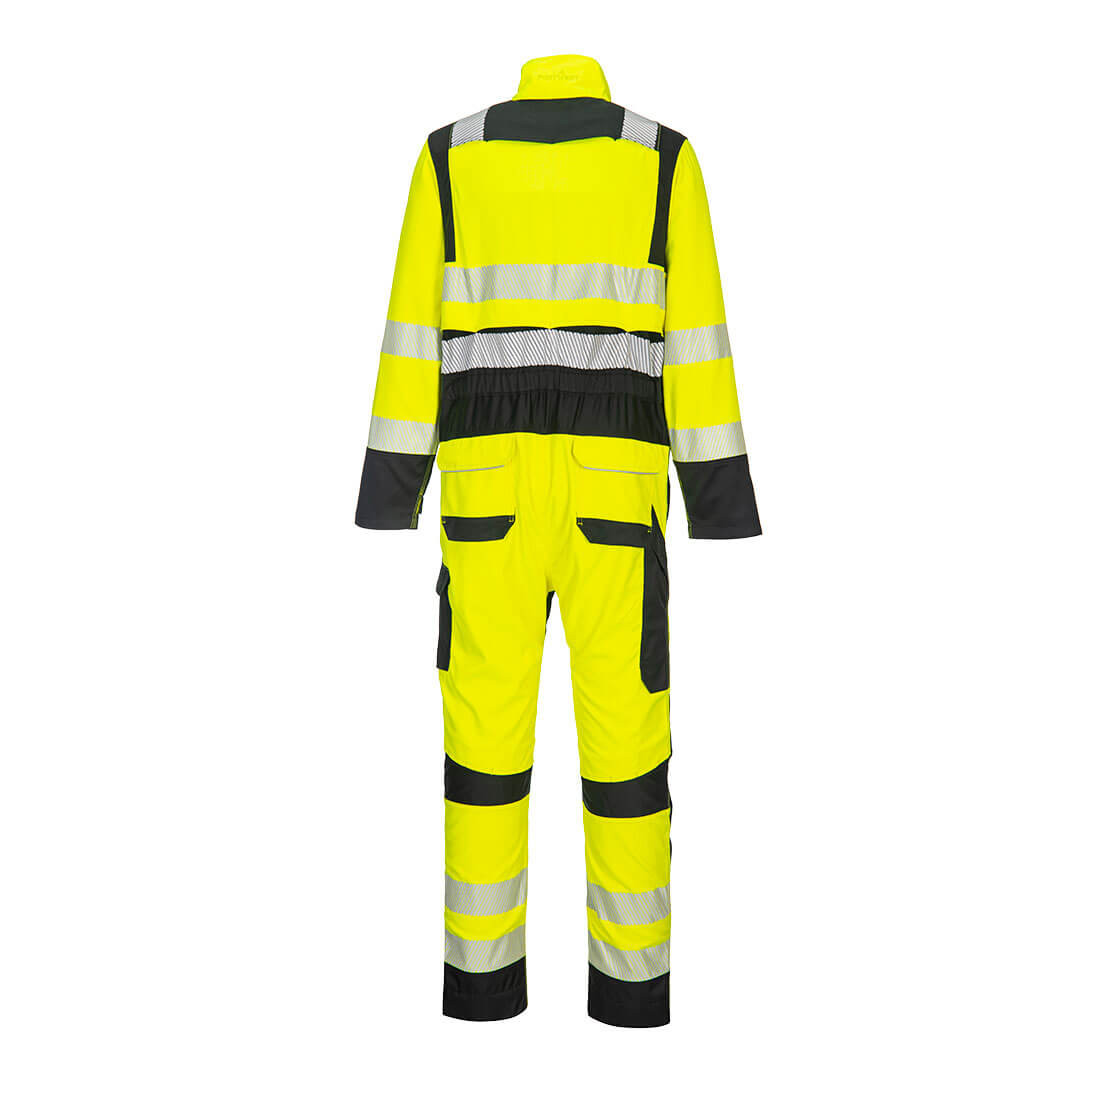 PW3 FR Warnschutz Overall - Arbeitskleidung